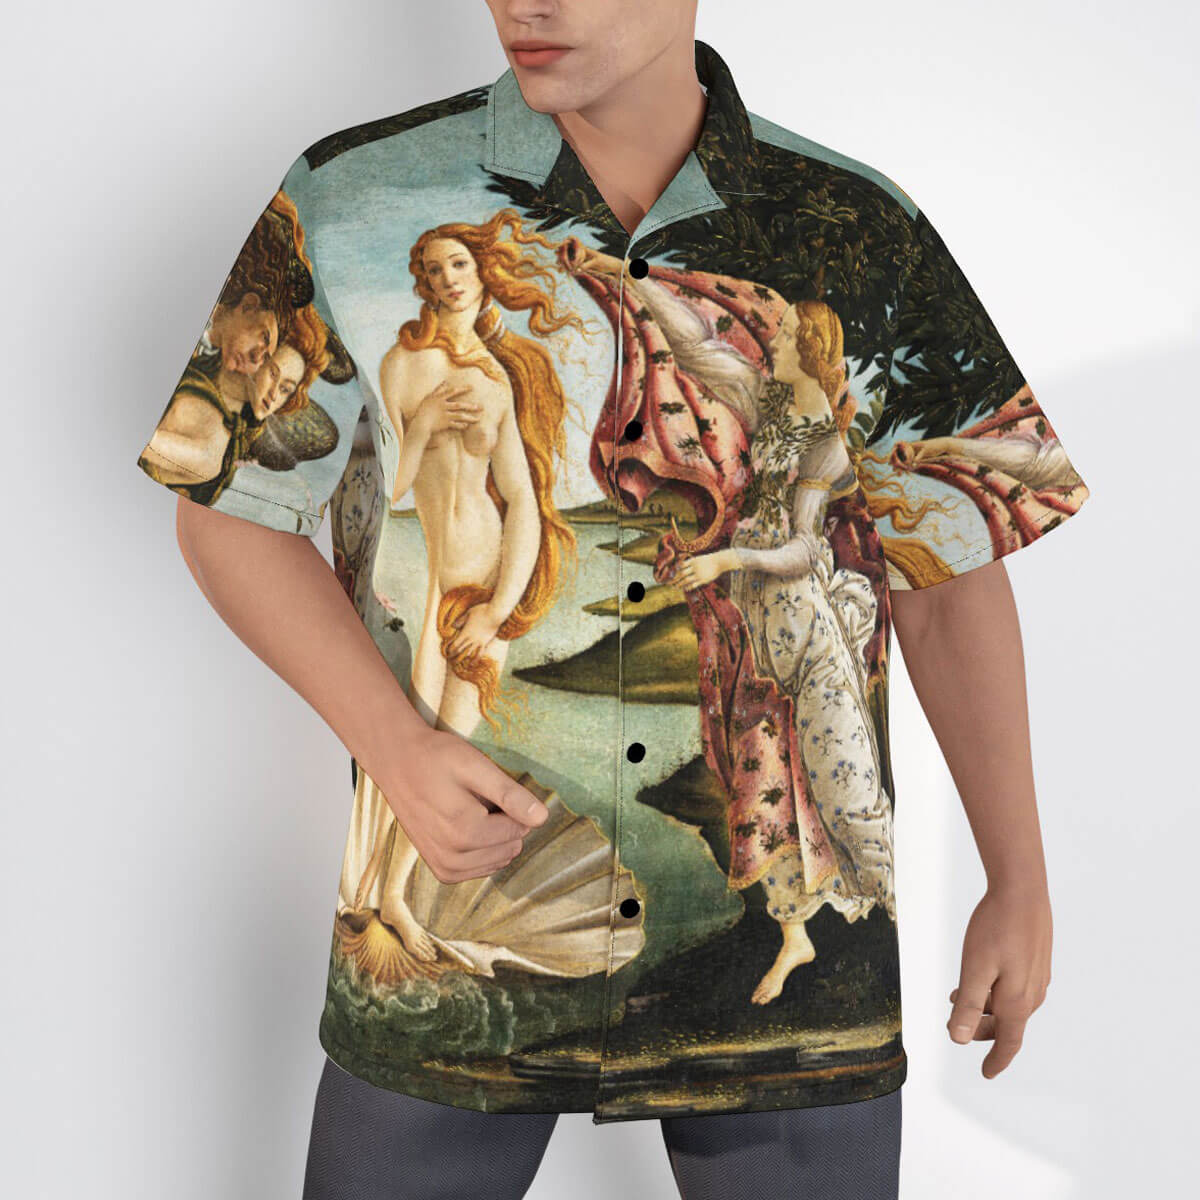 Detail of flowing hair on Botticelli Hawaiian shirt